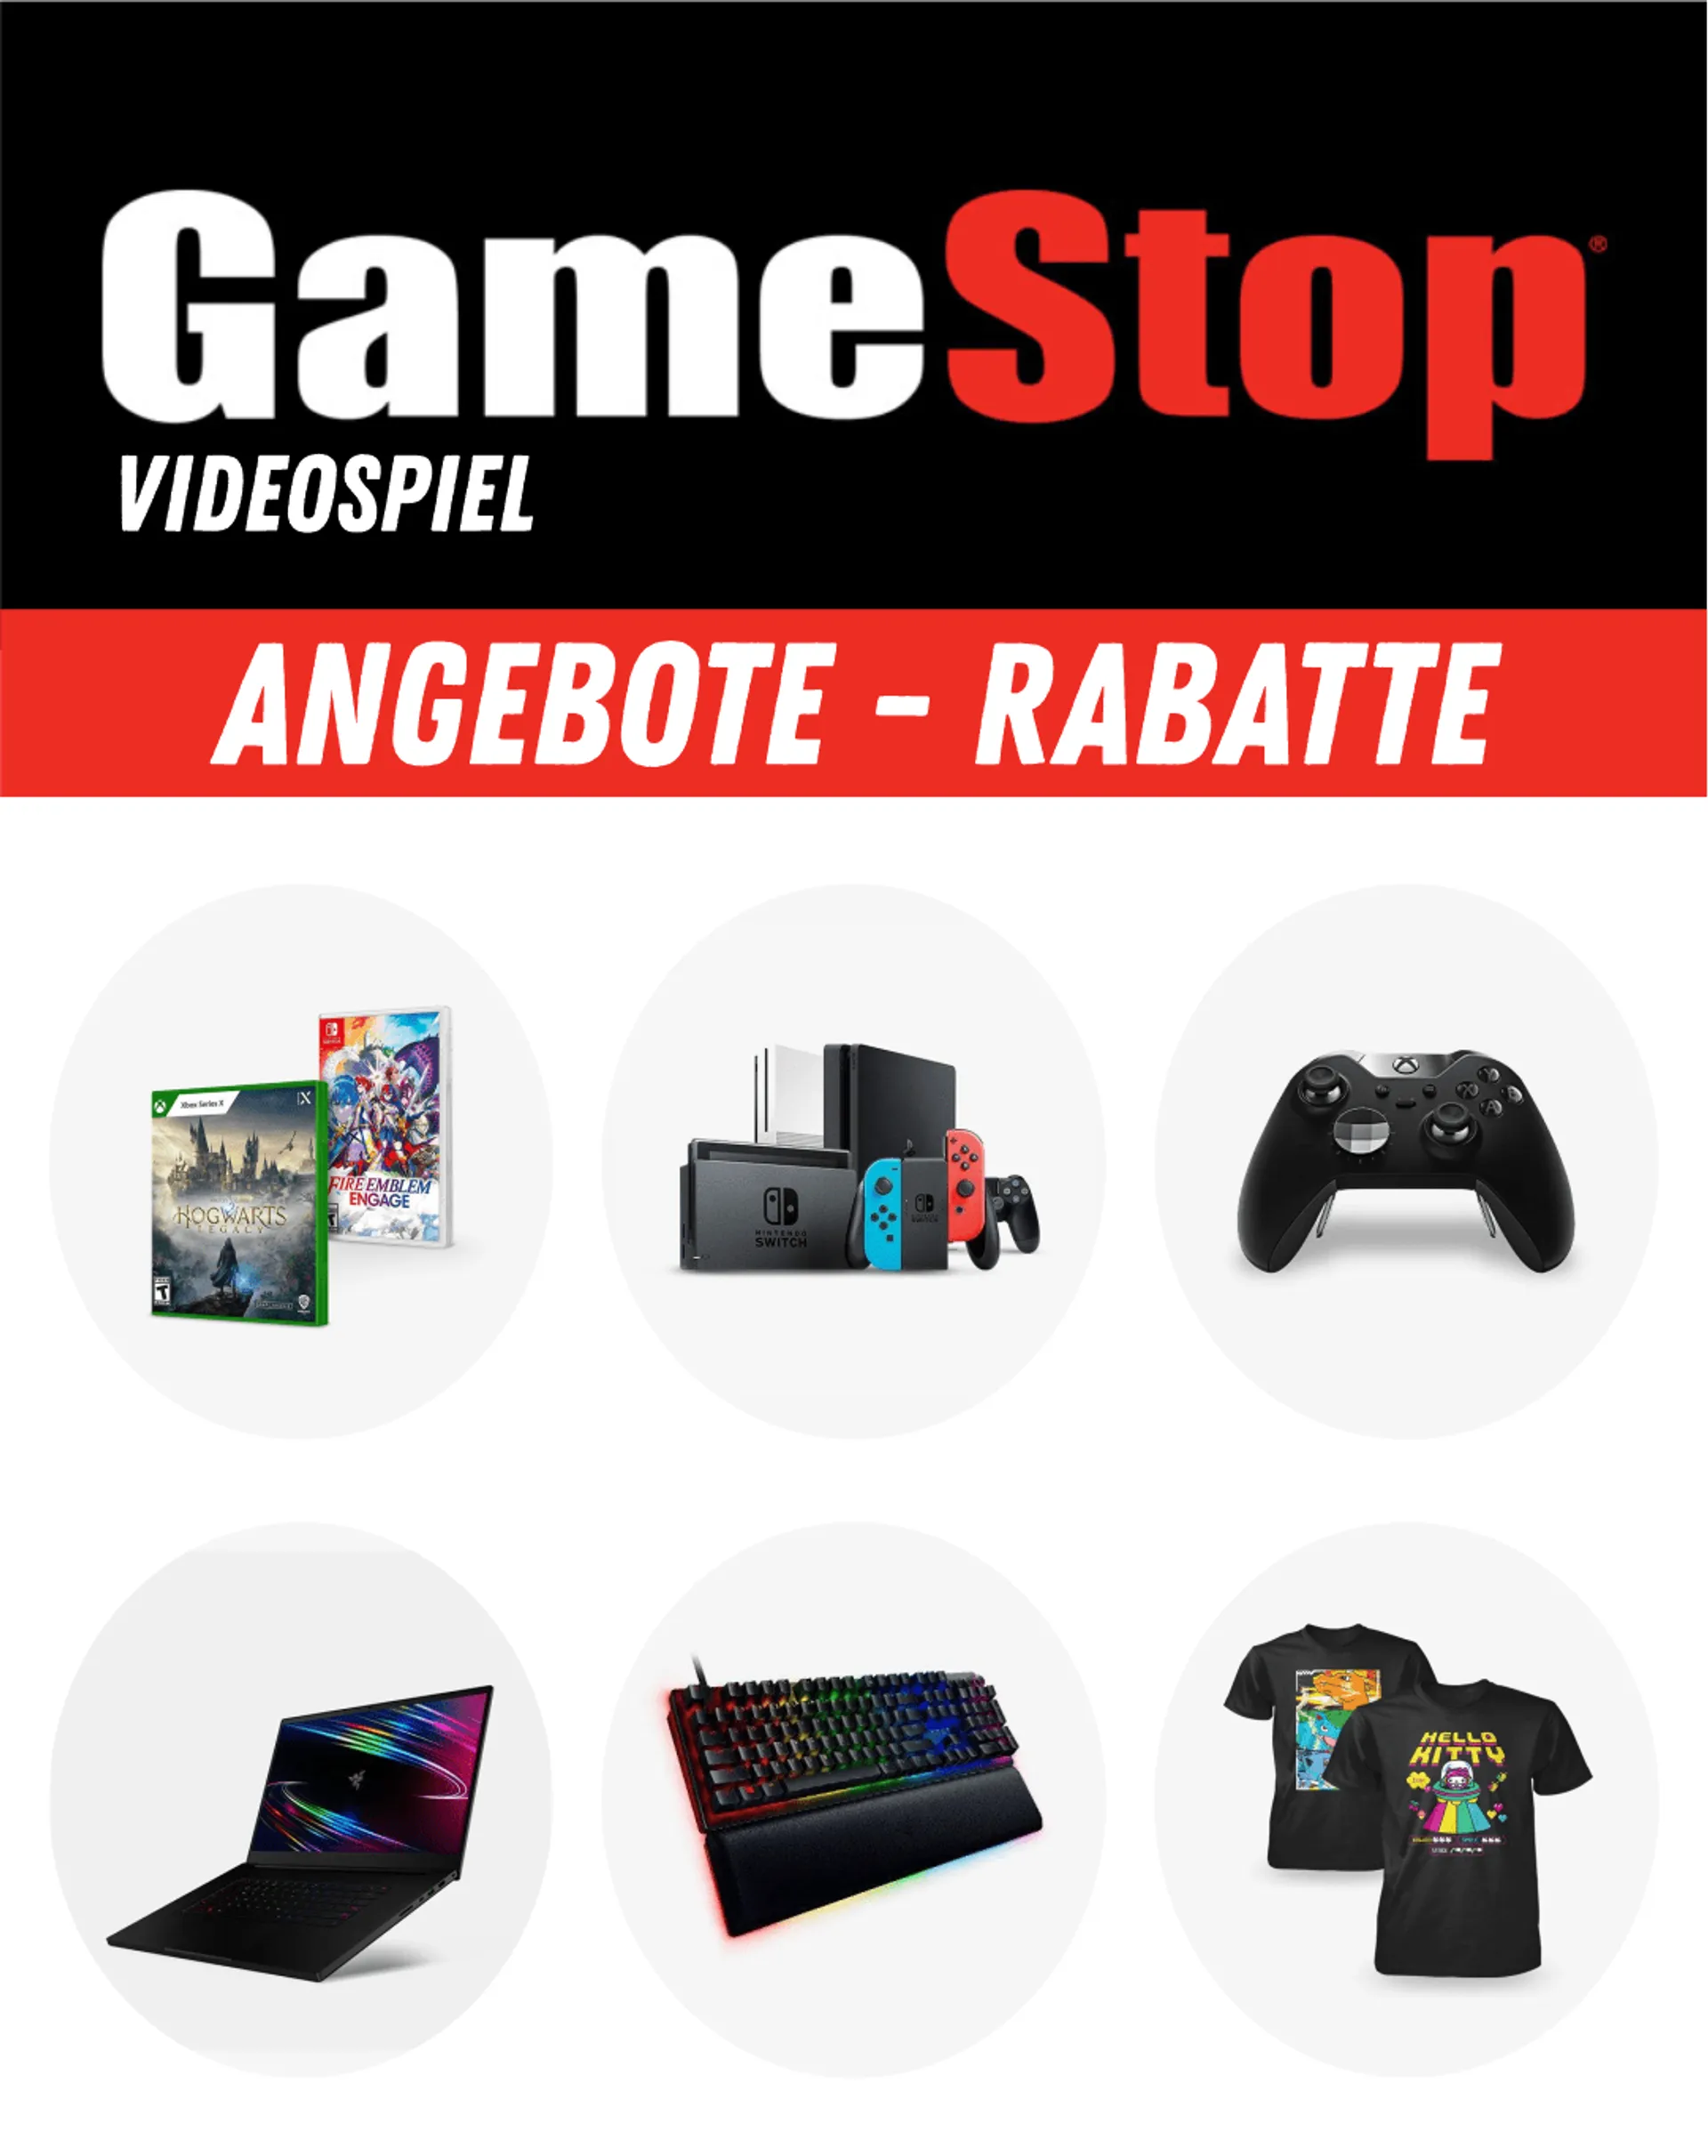 GameStop - Angebote | Rabatte